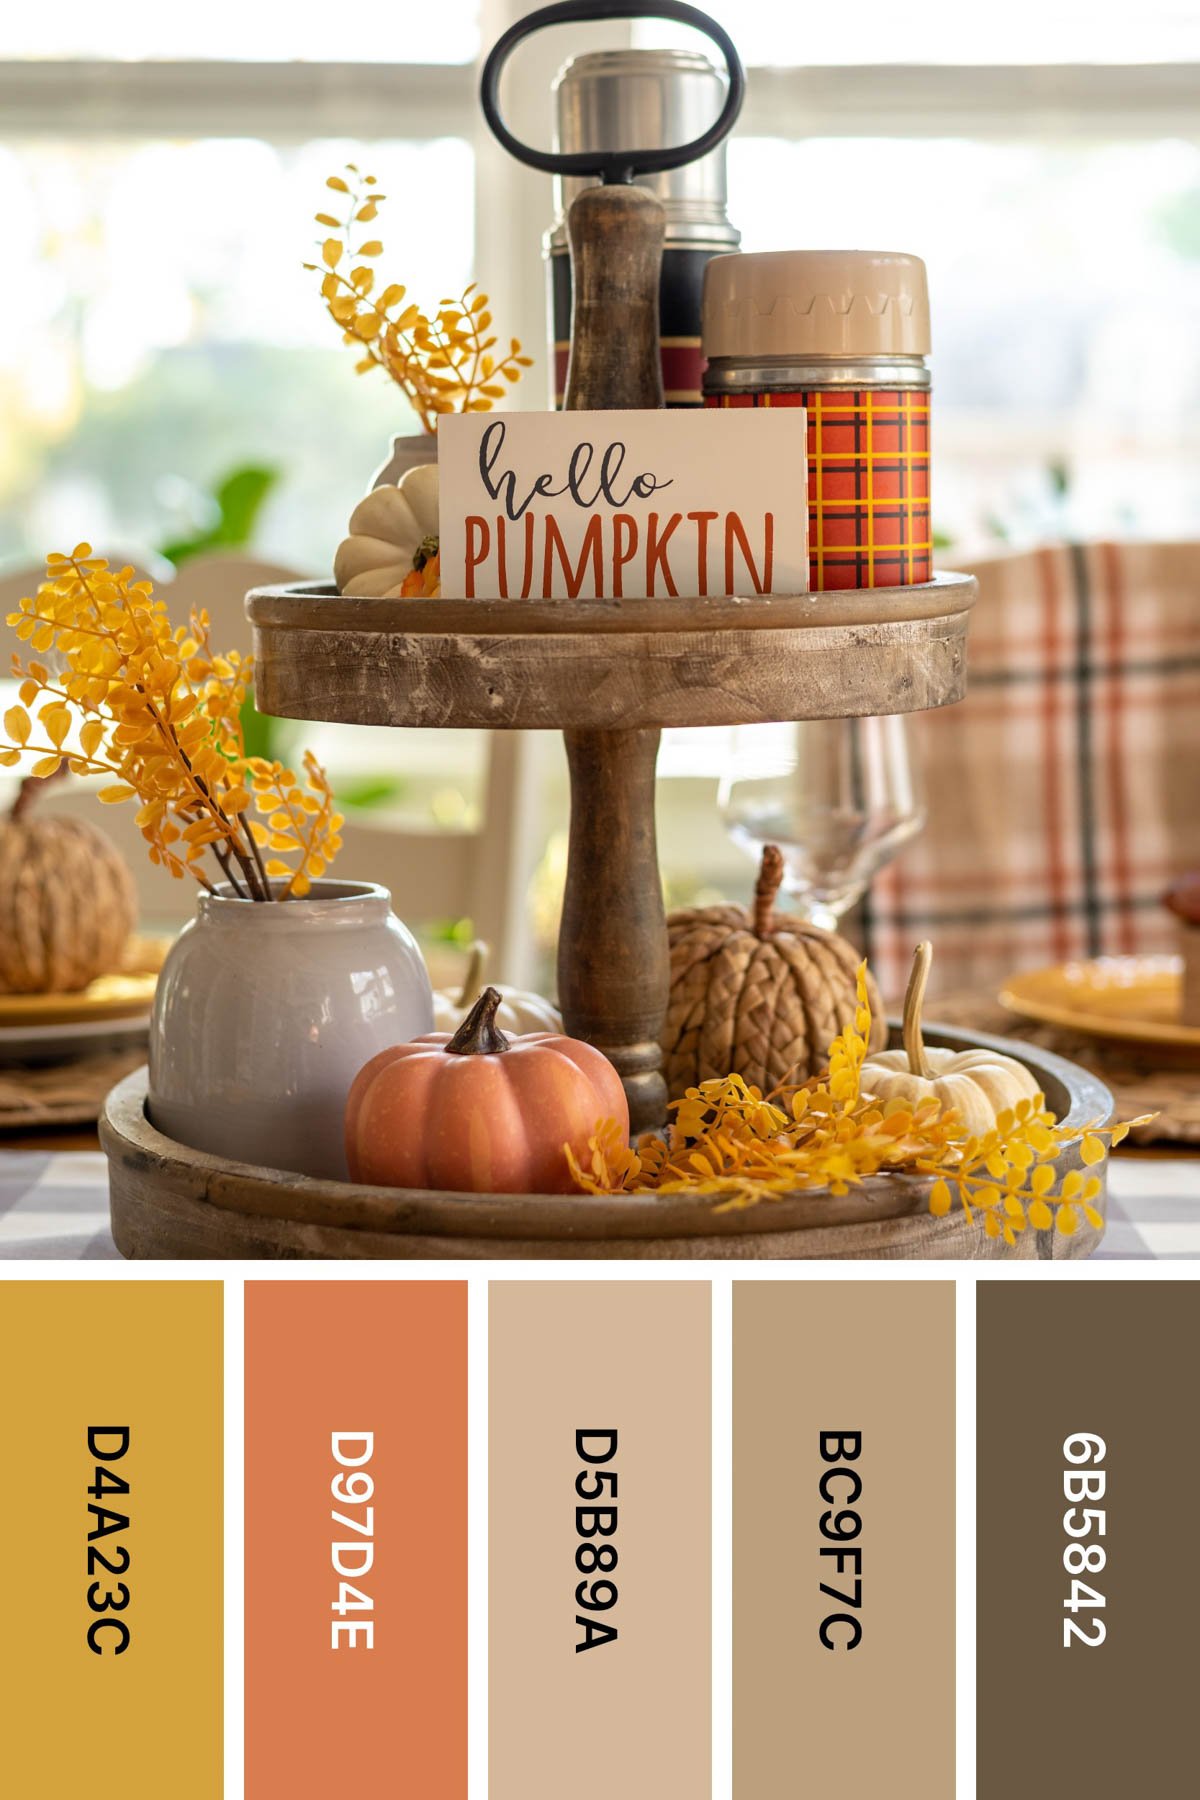 hello pumpkin tablescape with a fall color palette